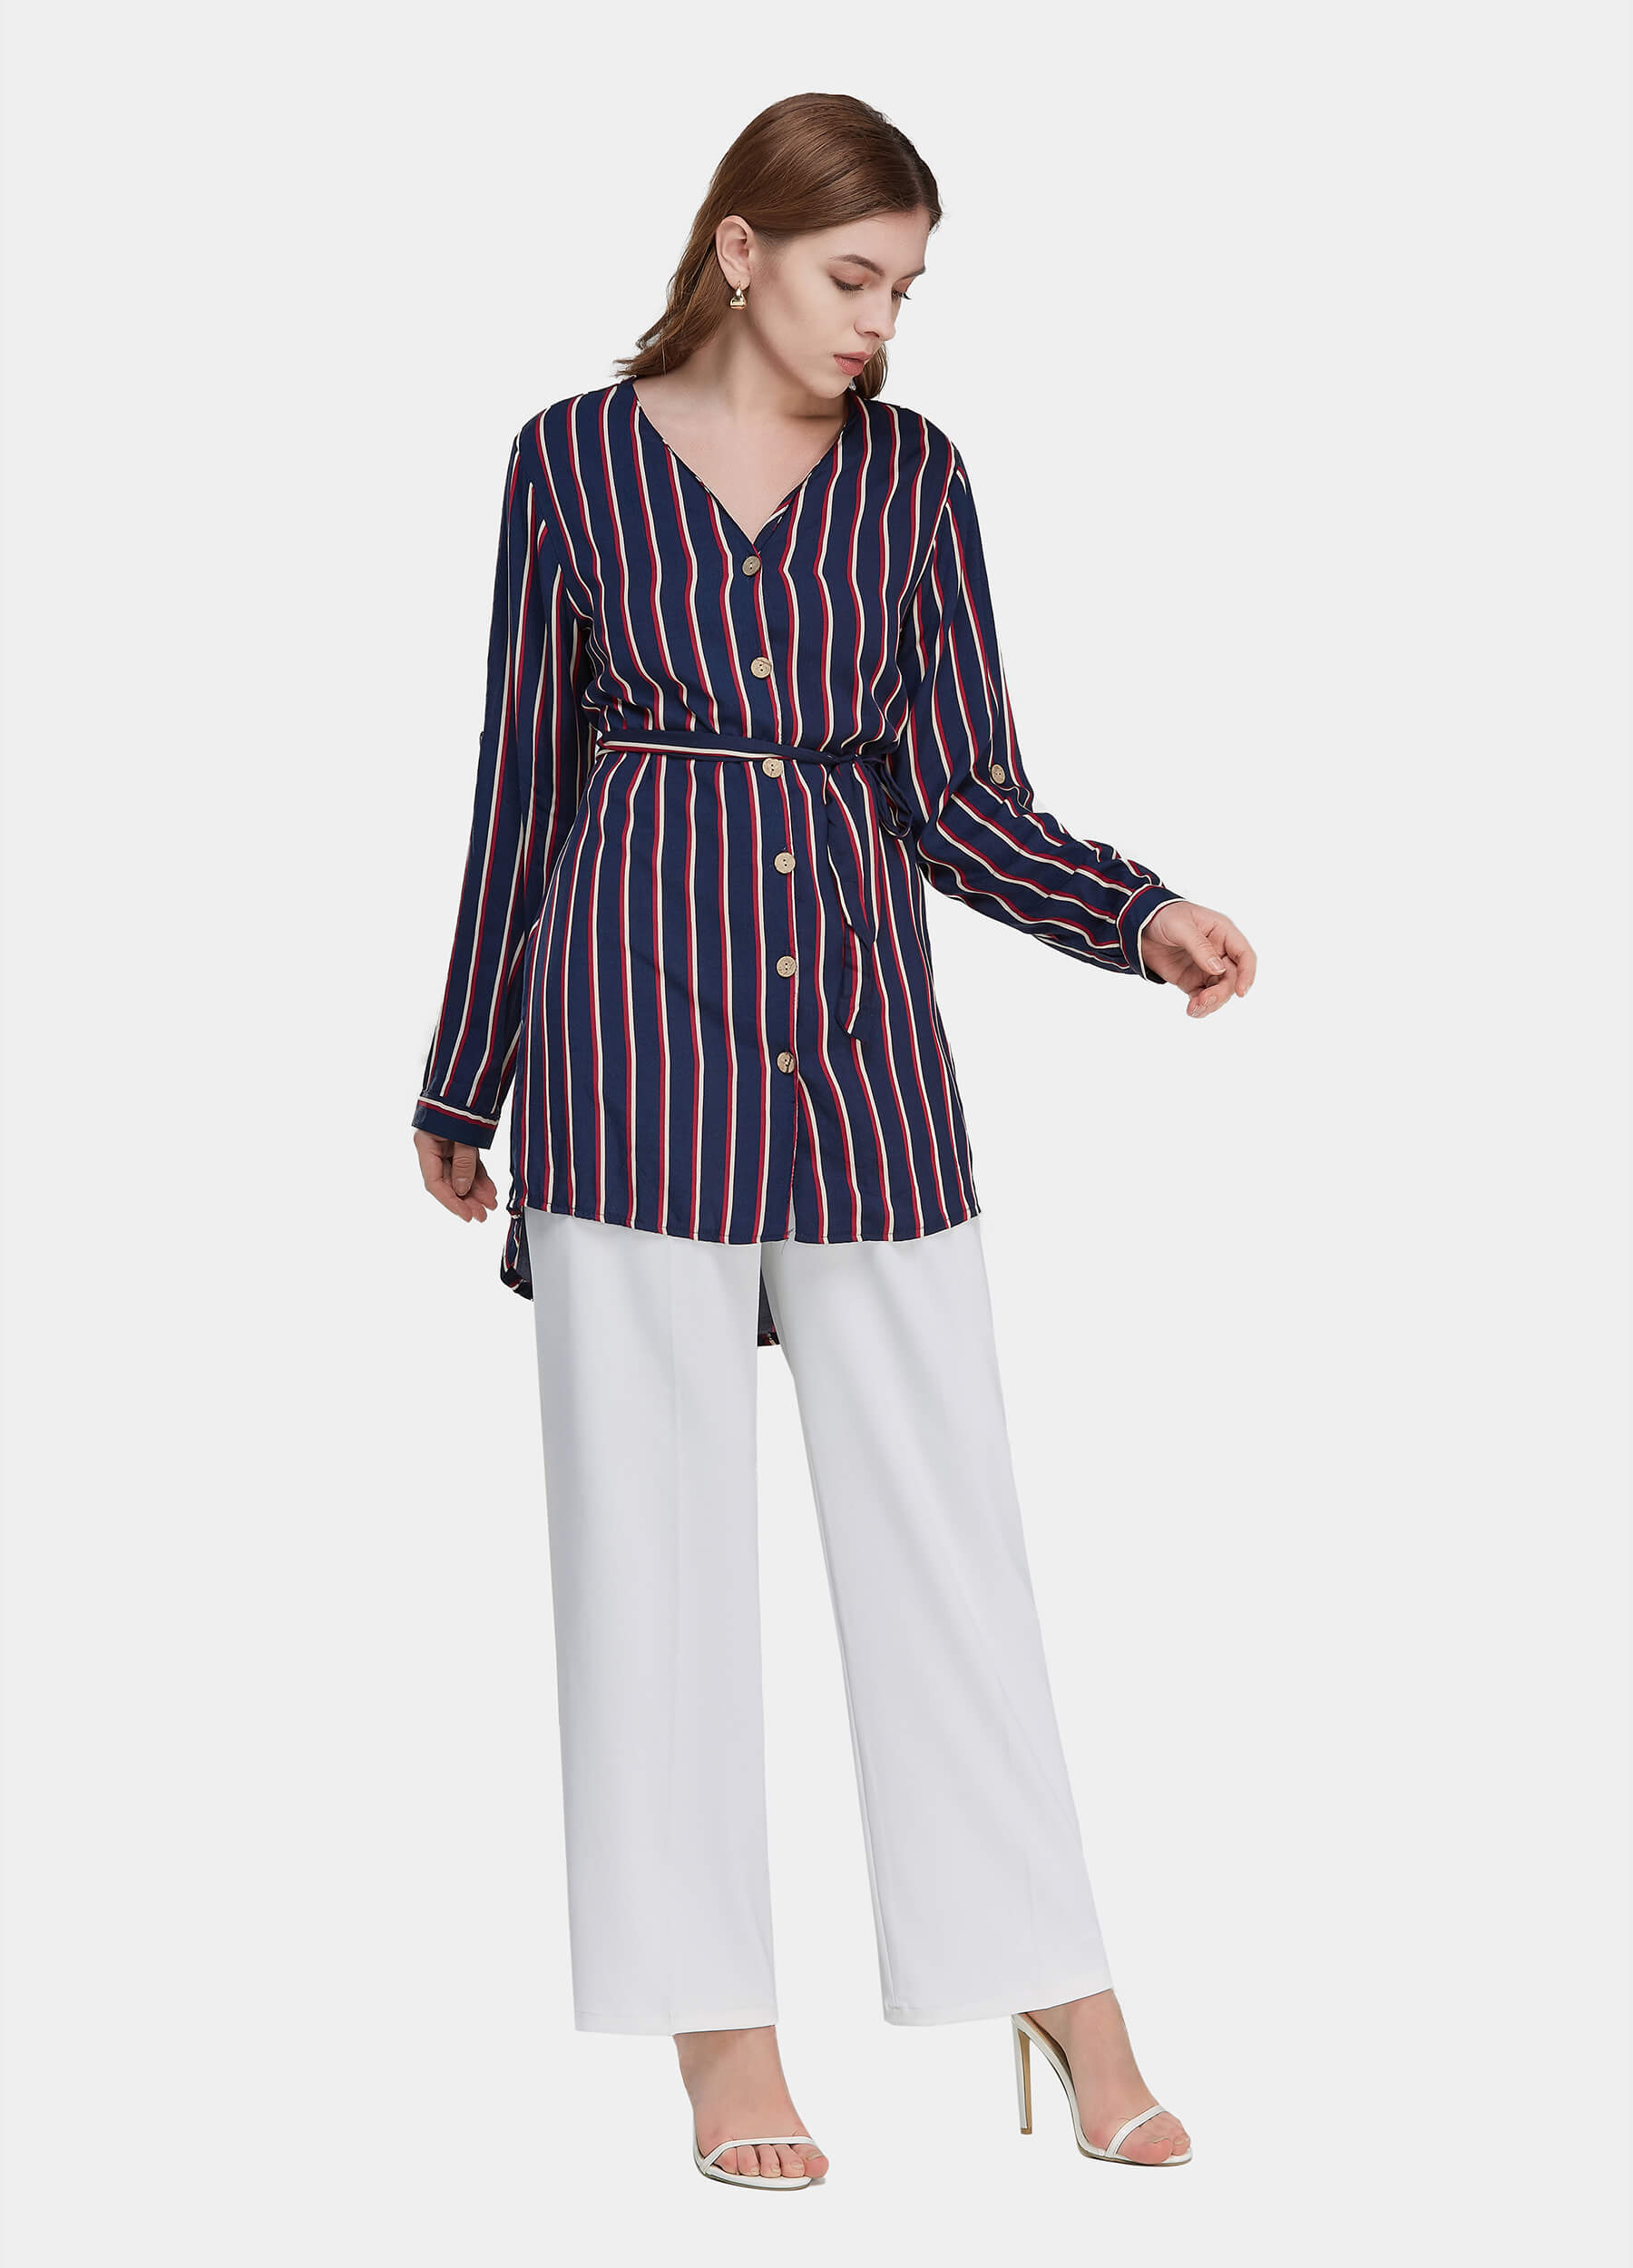 Women's Fall V-Neck Button High Low Hem Belted Striped Short Dress-Navy Blue side view